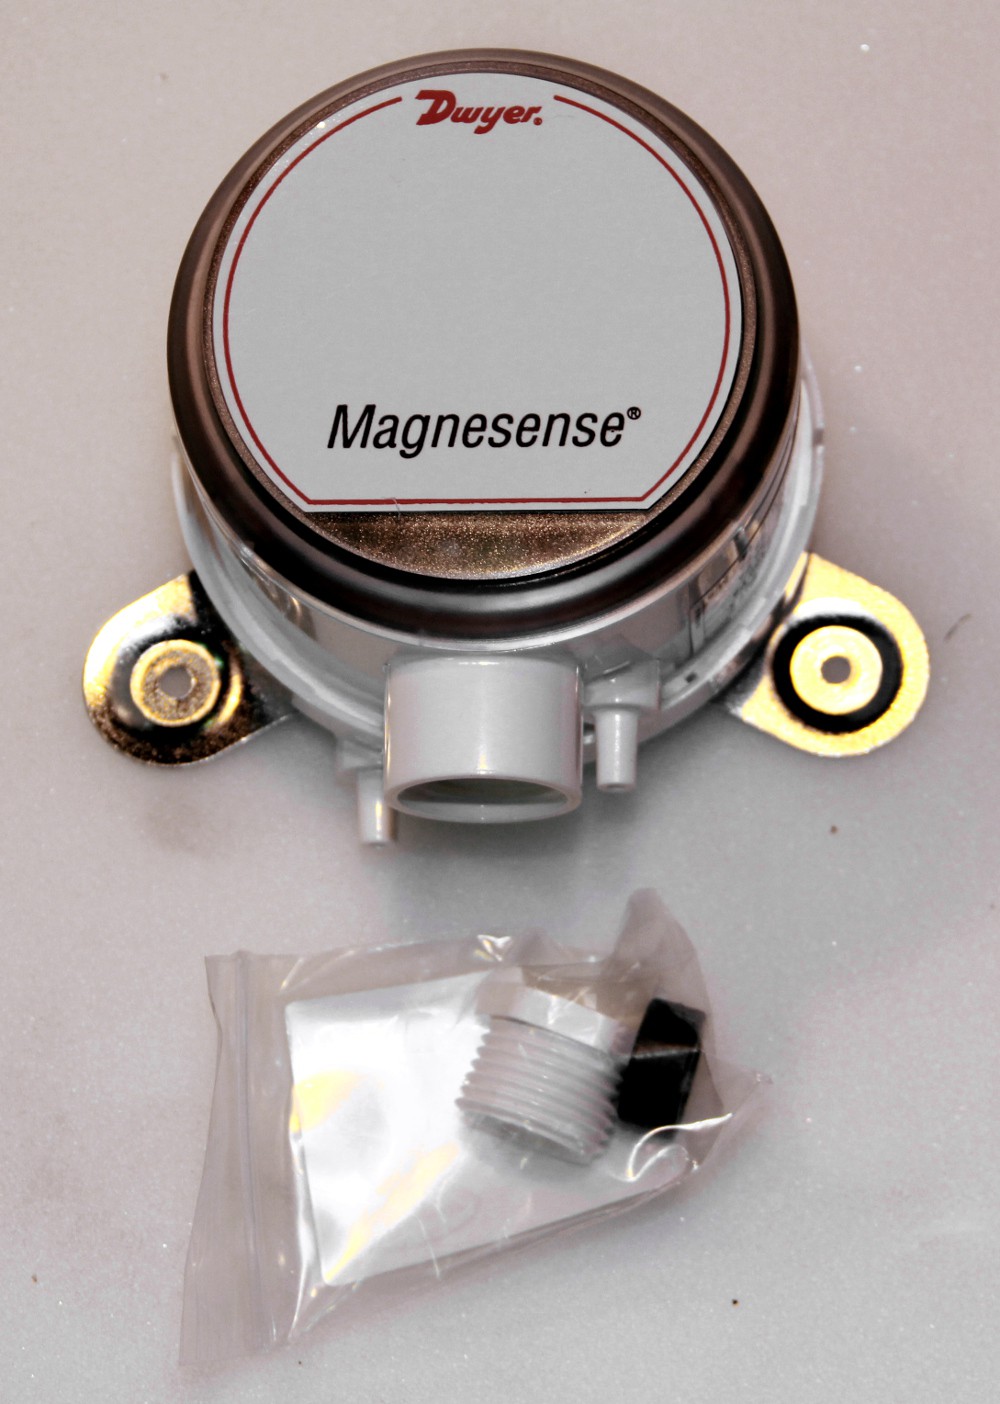 Under pressure sensor without display 1DW150620 Dwyer Magnesense MS-131